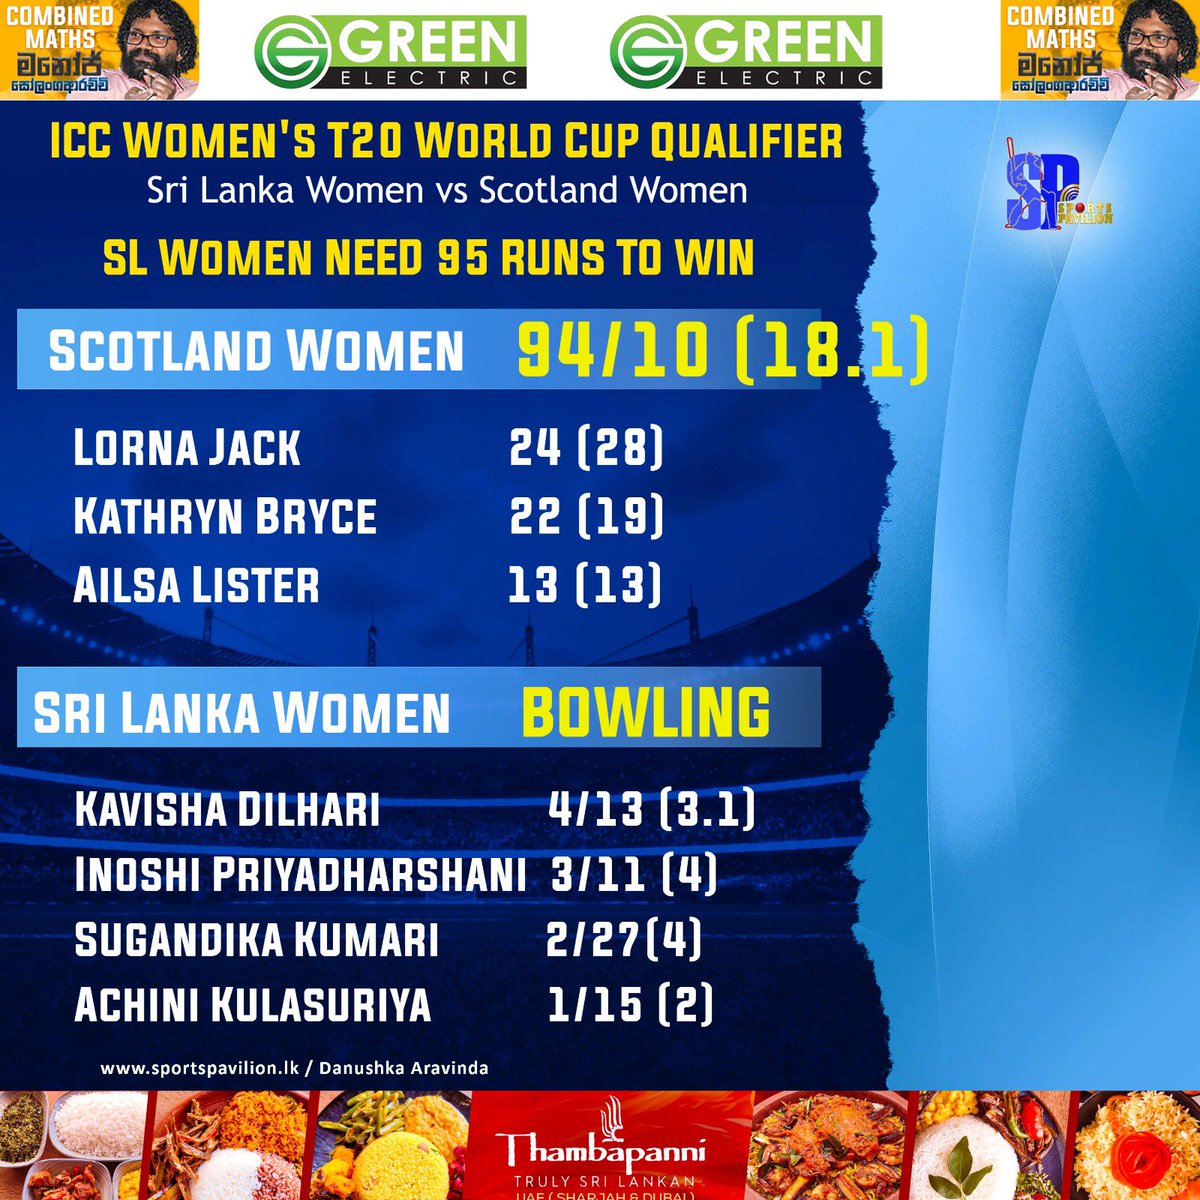 Sri Lanka Women need 95 runs to win 

#sportspavilionlk #icct20qulifier #danushkaaravinda #SLvsSCO